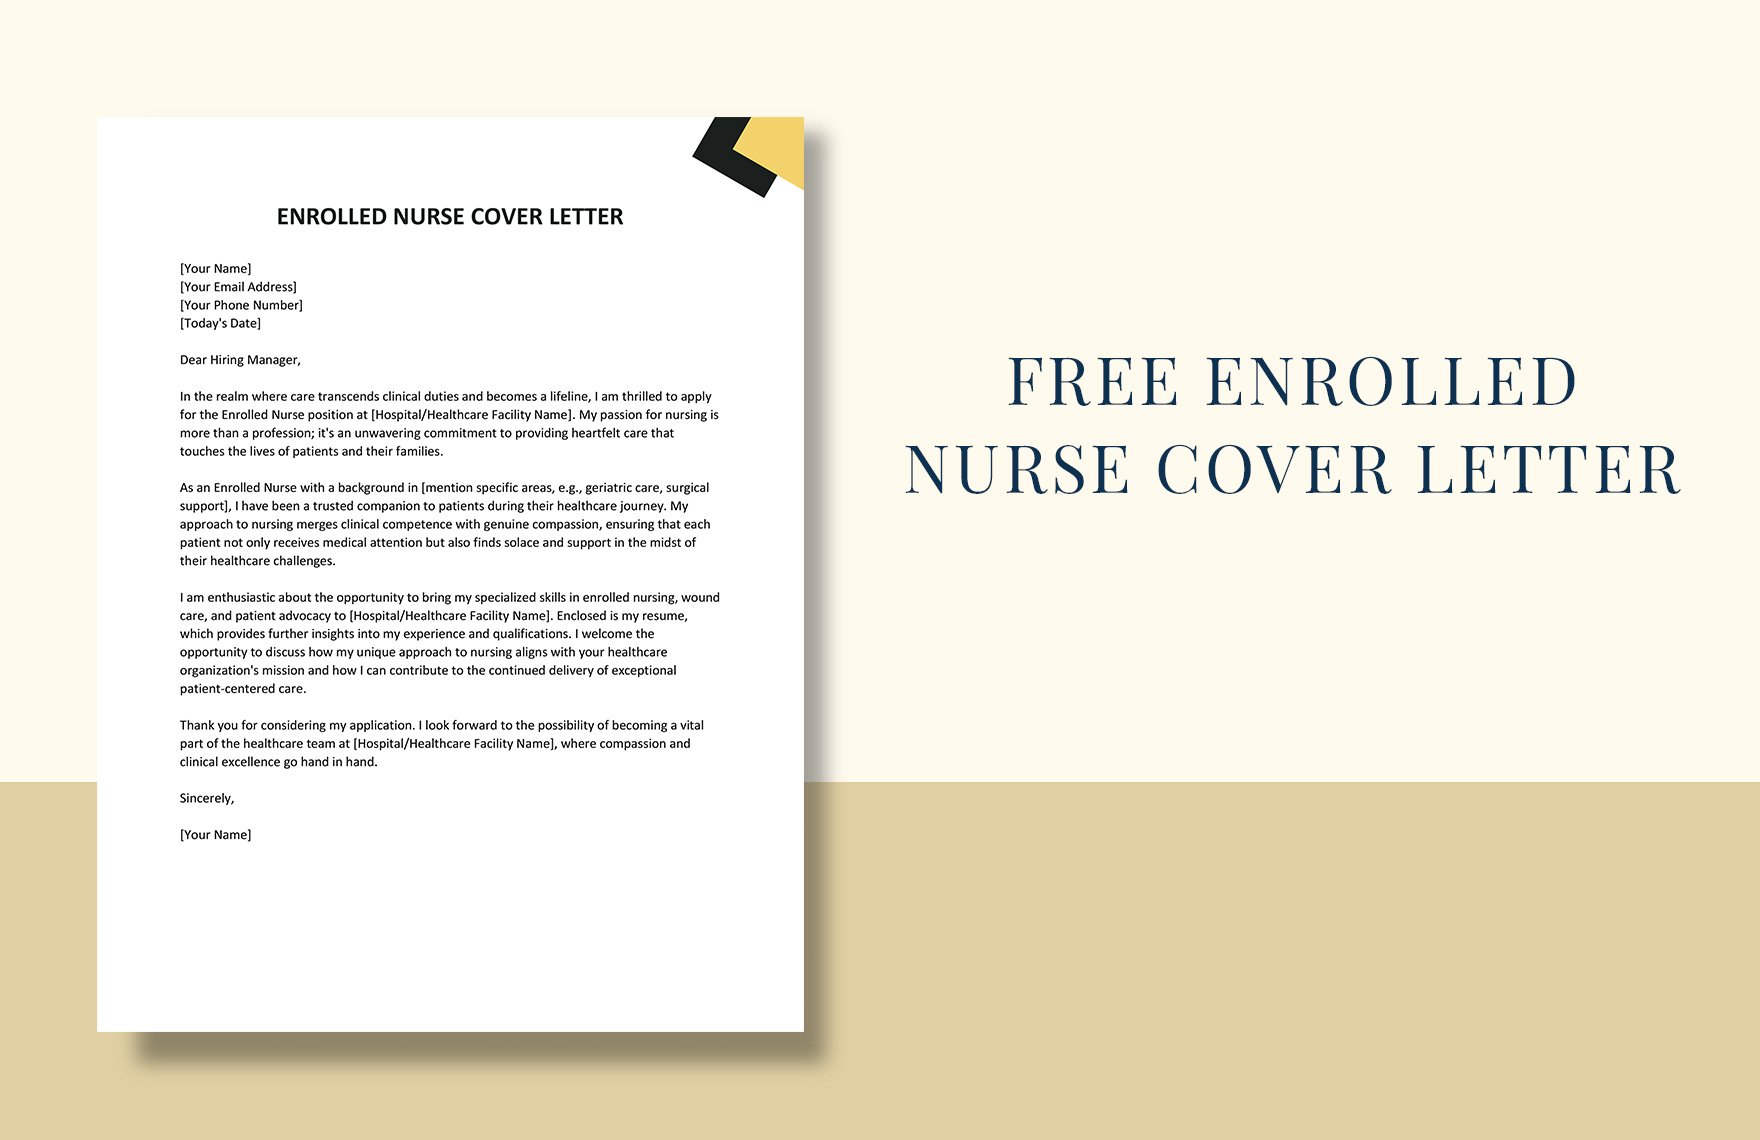 Enrolled Nurse Cover Letter in Word, Google Docs